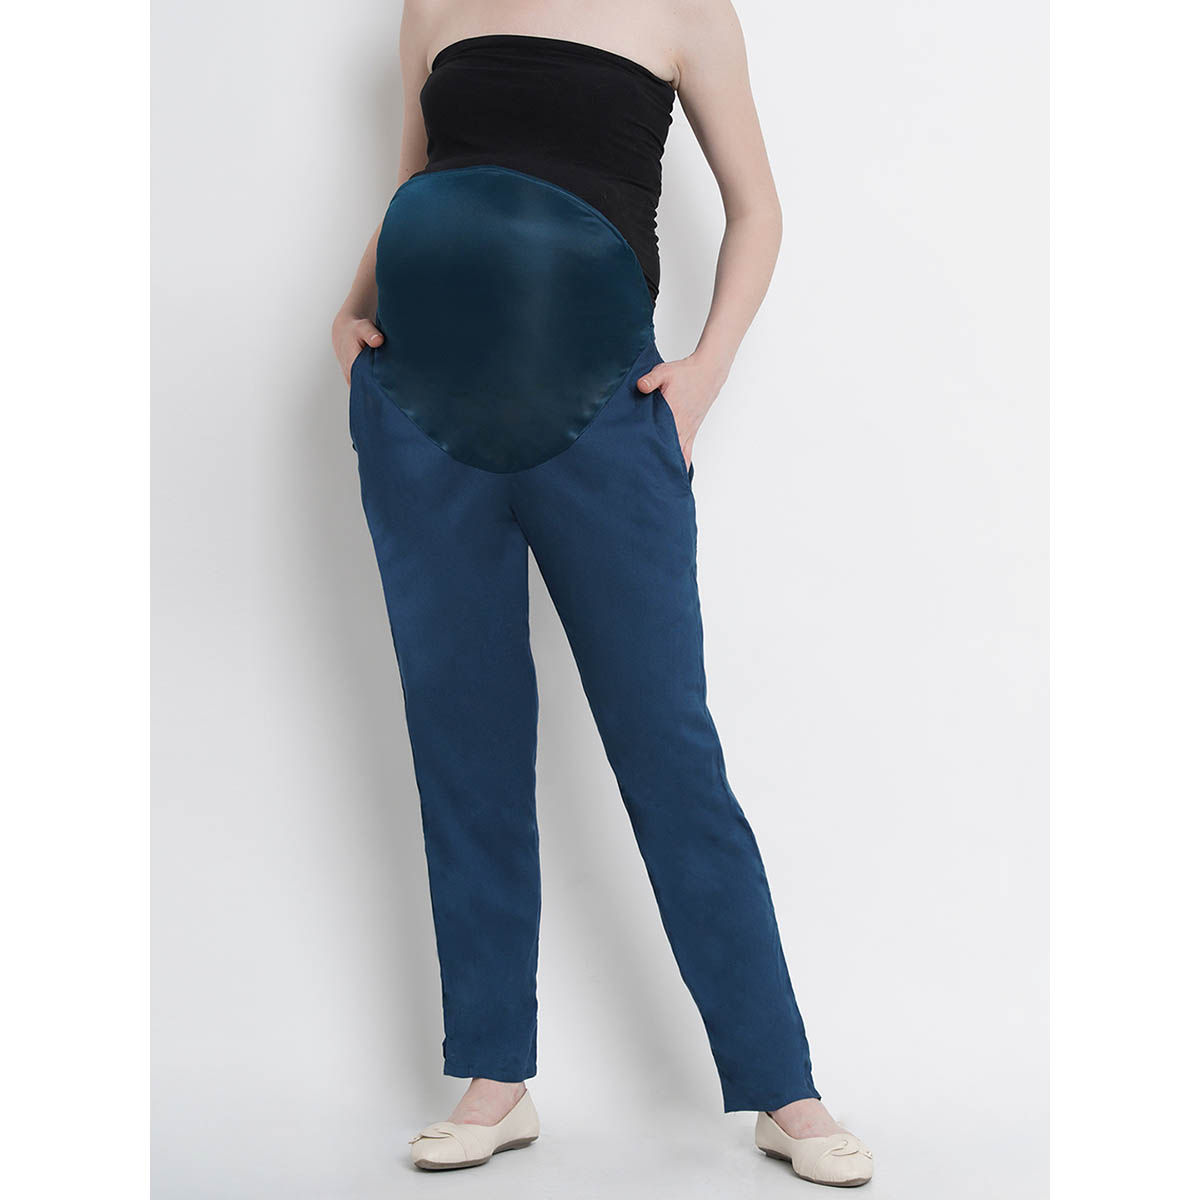 Buy Sherah Maternity Elastic Tailored Trousers @ Love, Bonito Singapore |  Shop Women's Fashion Online | Love, Bonito SG